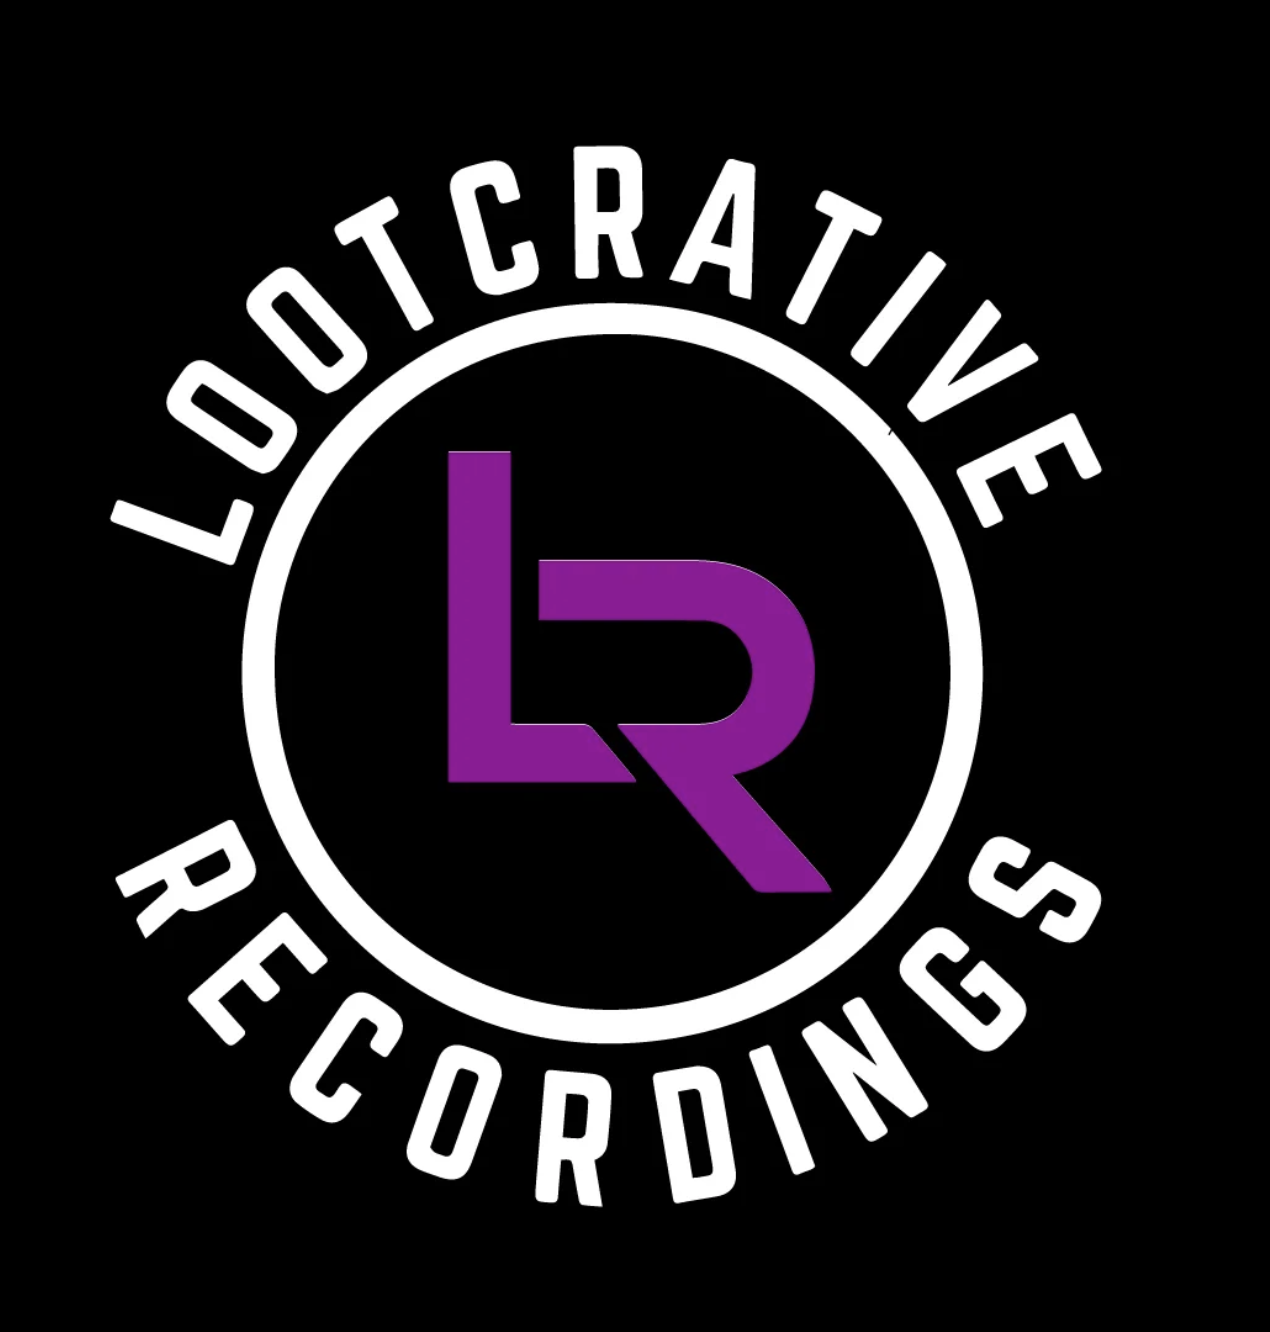 Lootcrative Recordings